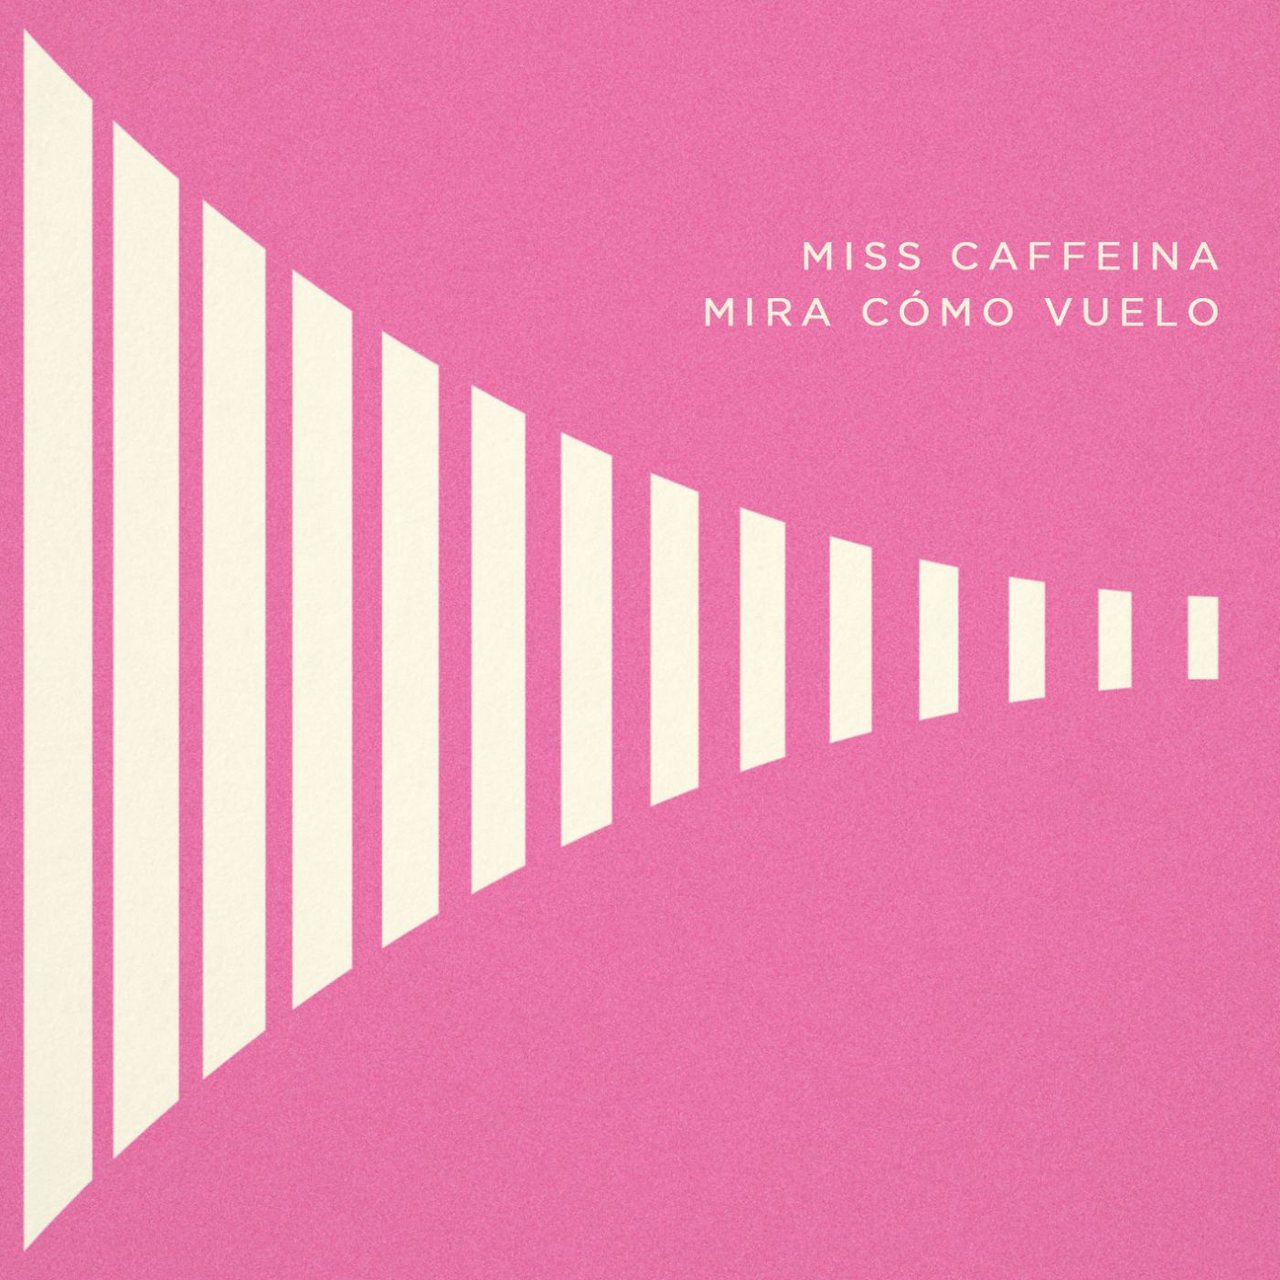 Miss Caffeina — Mira cómo vuelo cover artwork